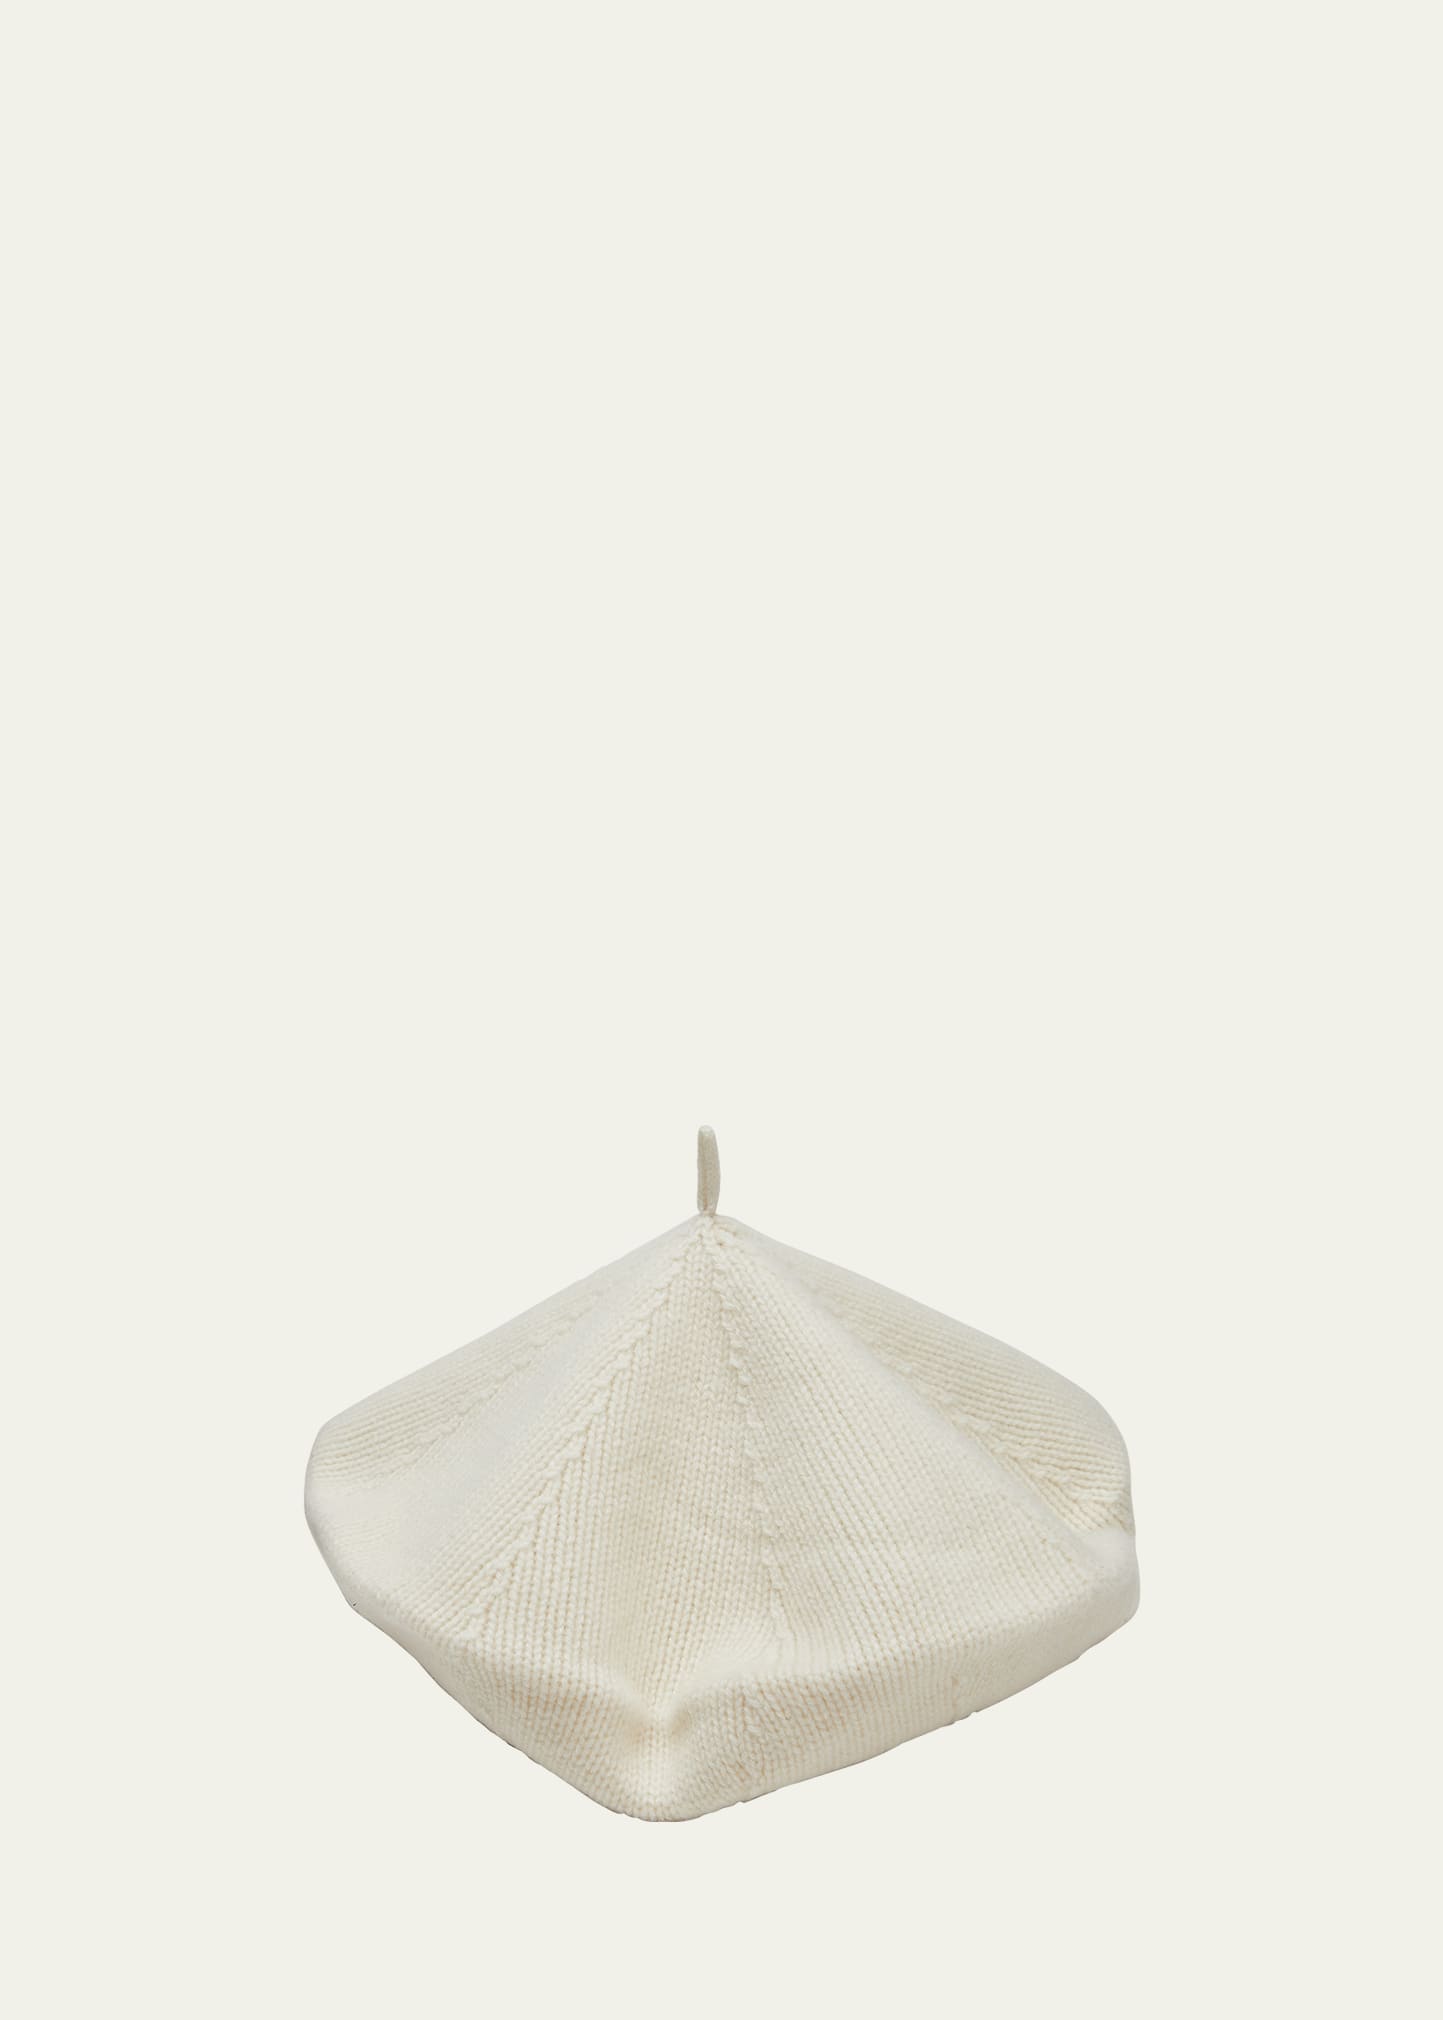 Lisa Yang Saint Germain Knit Beret In Cream